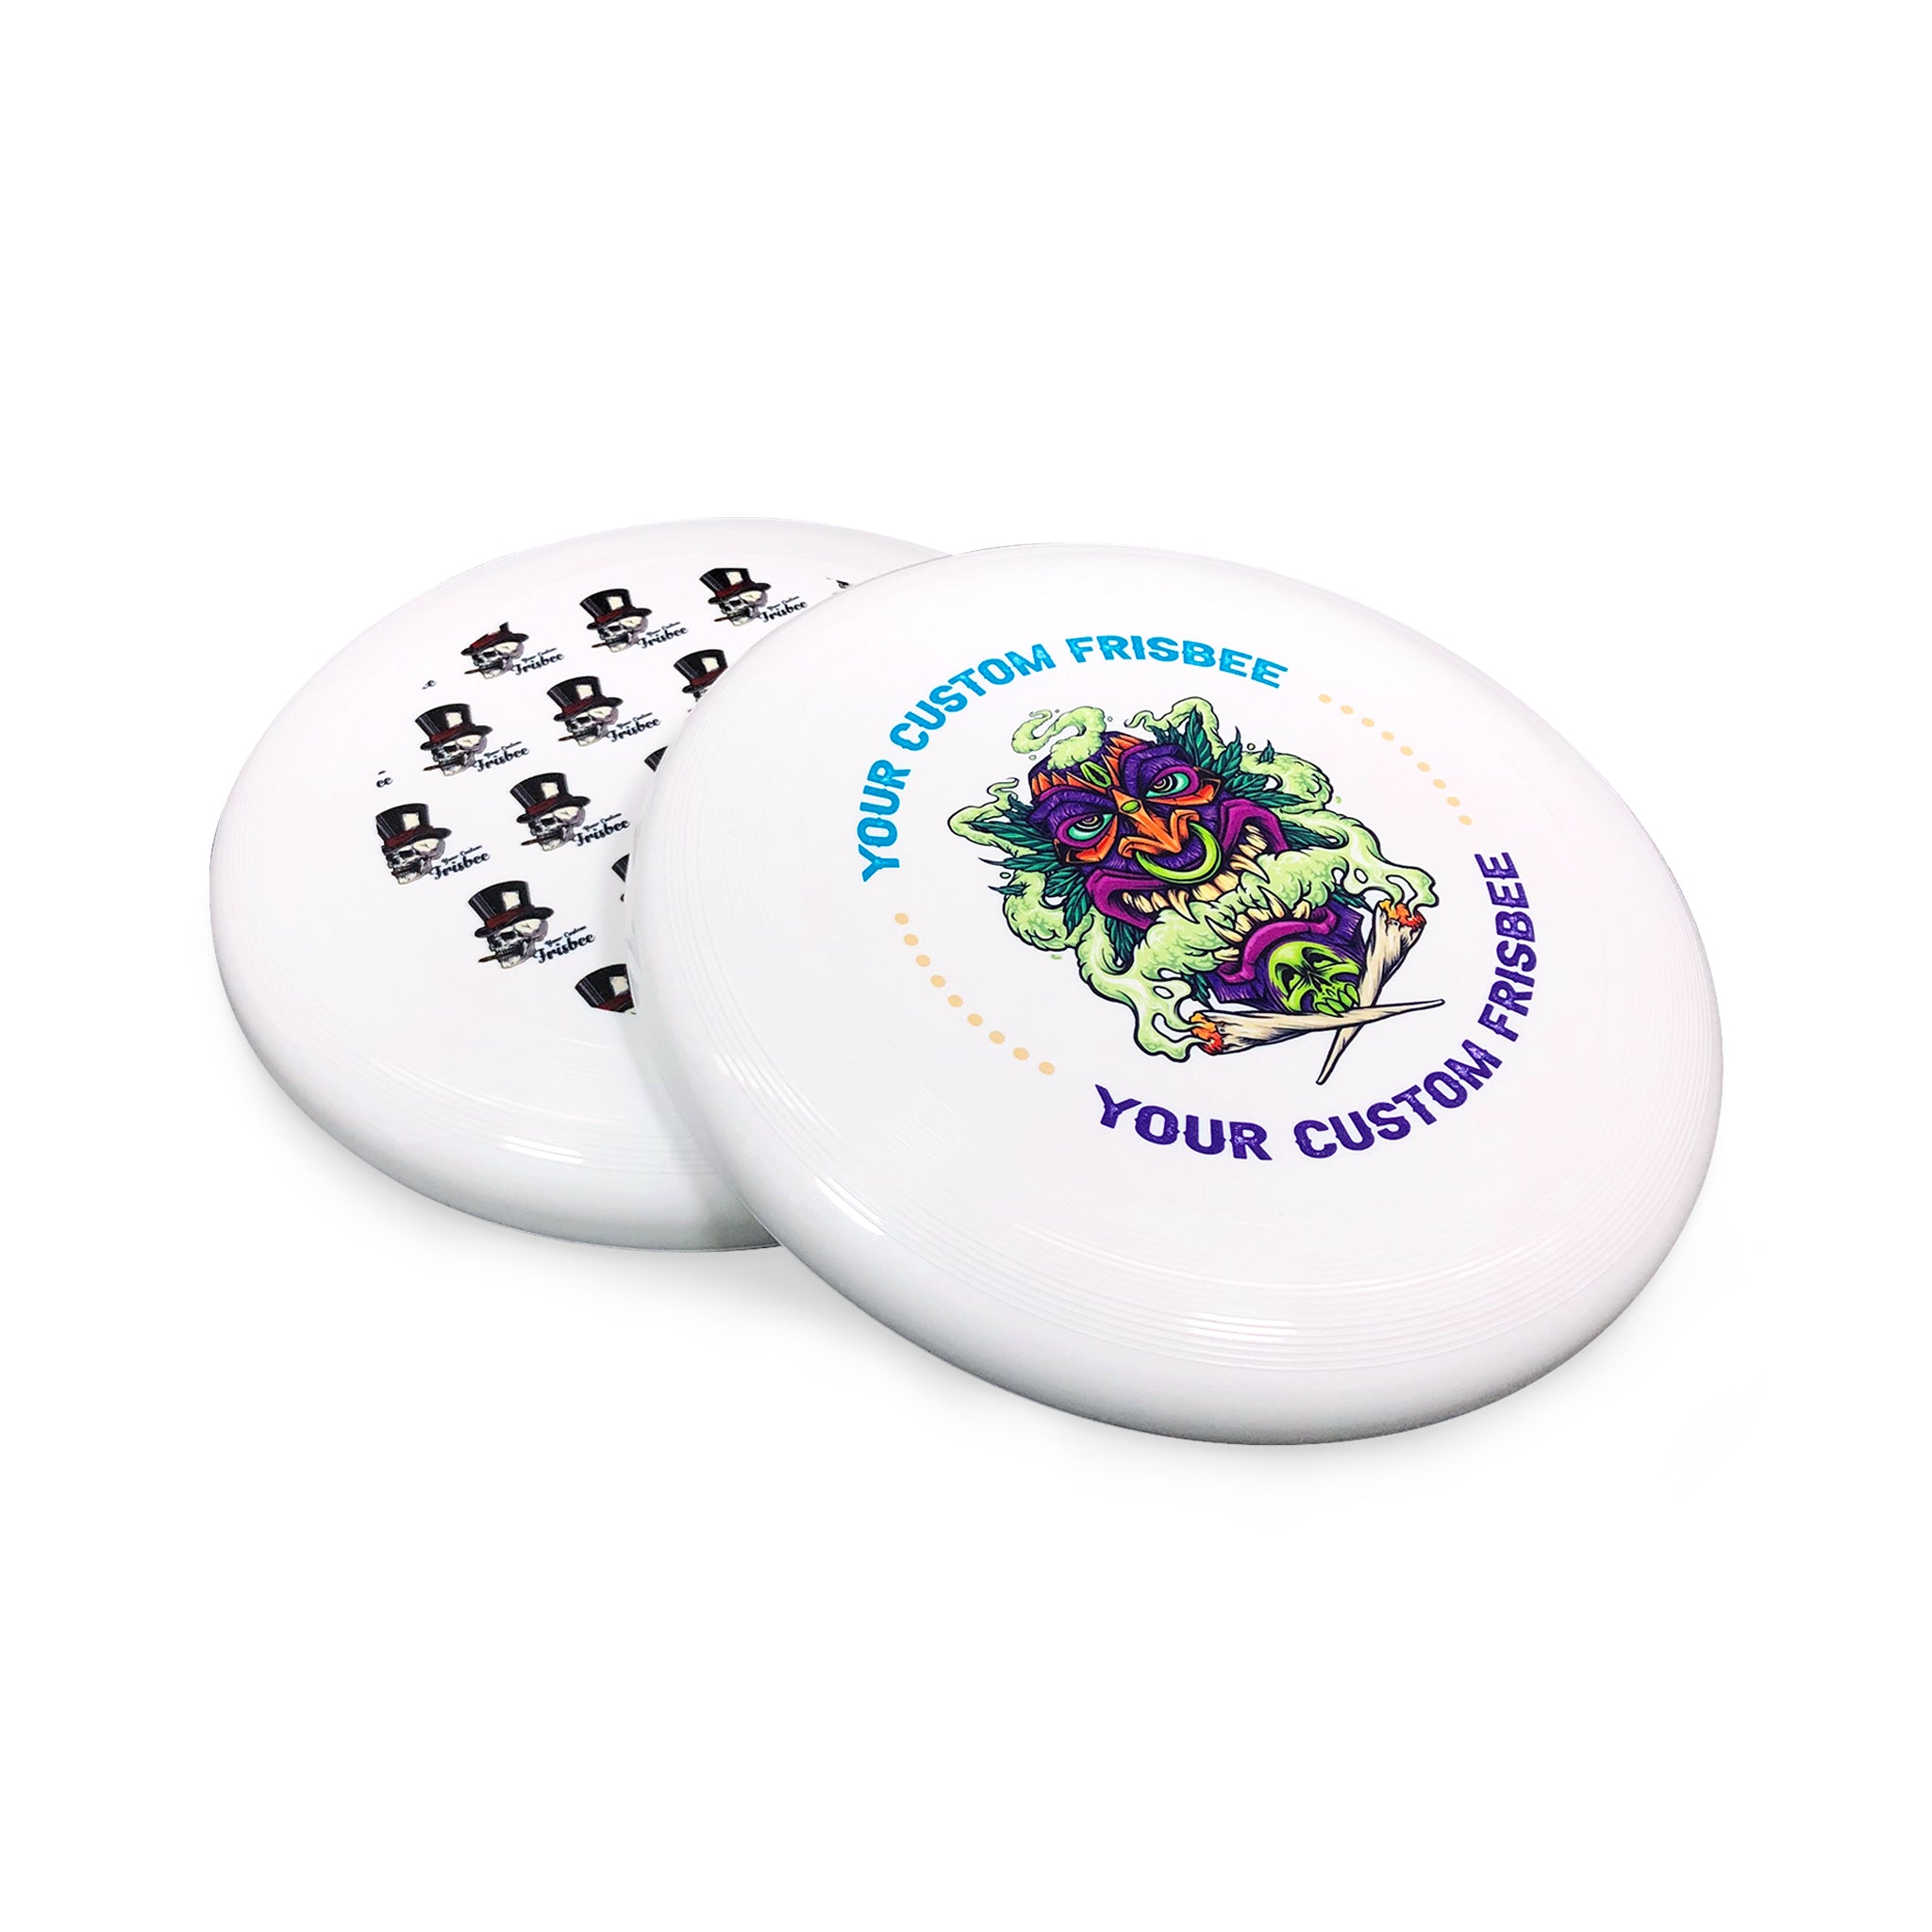 Custom Plastic Frisbees ⚪️